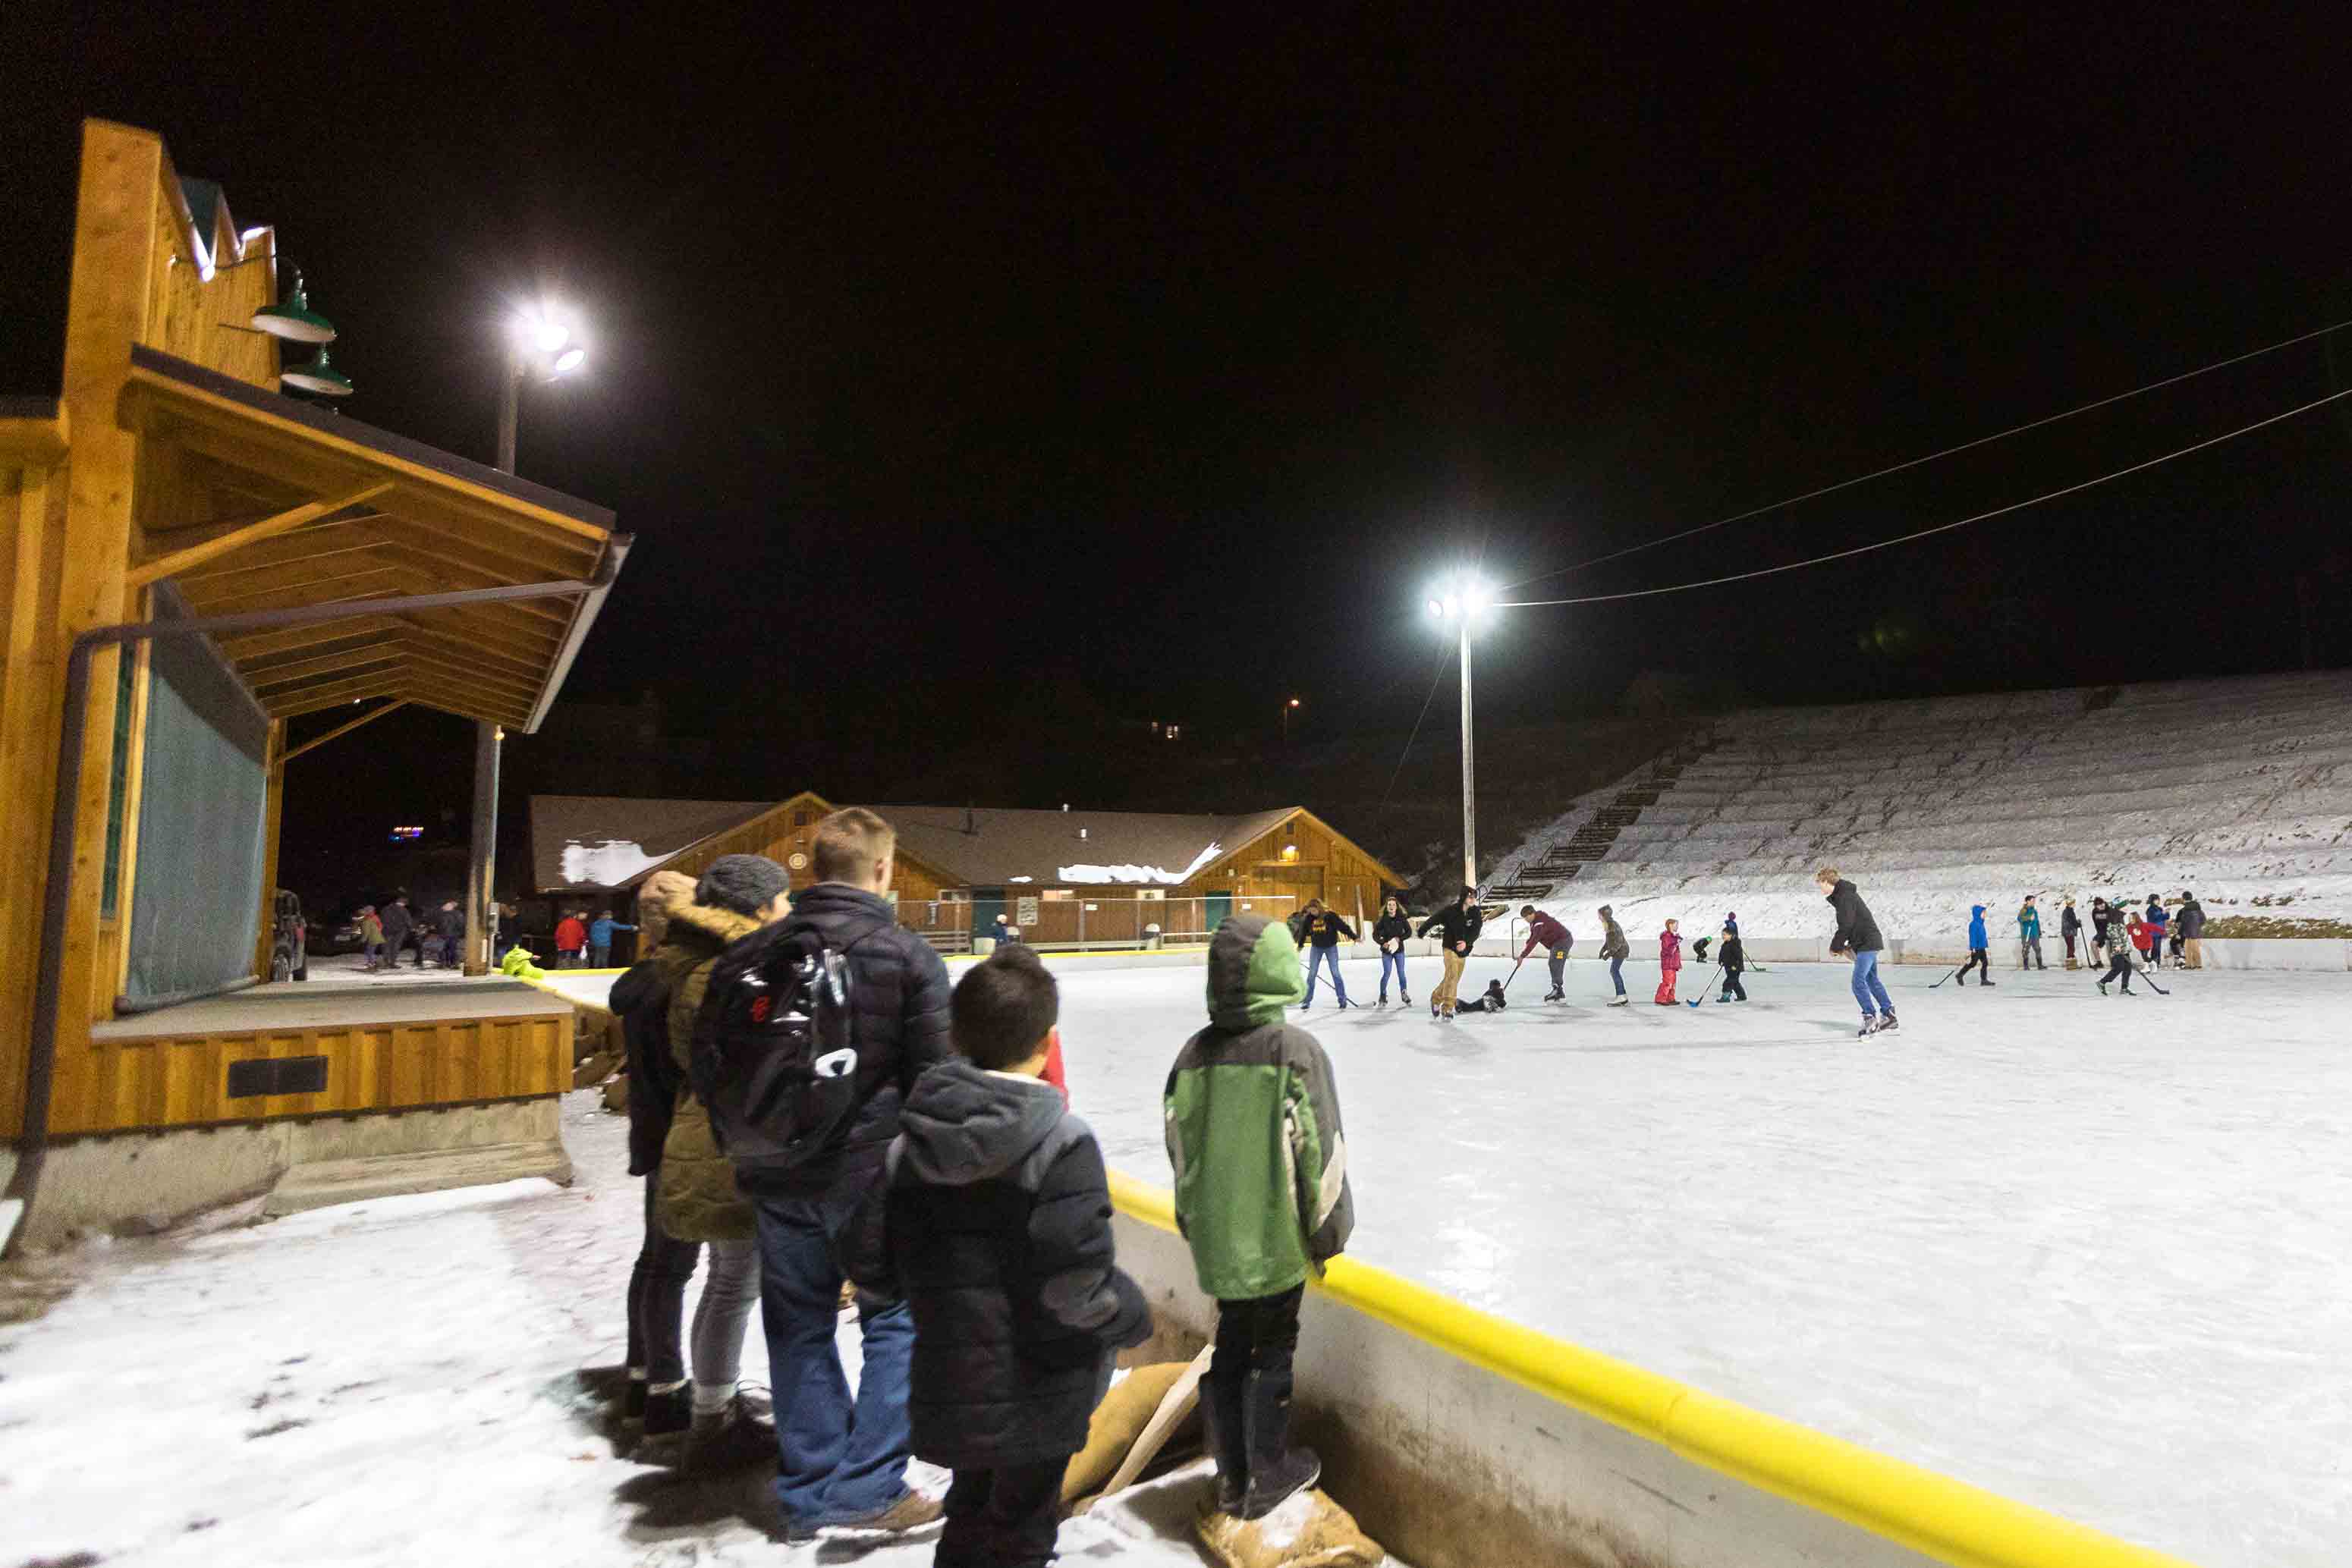 The ice rink at Winninghoff Park in Philipsburg, Montana.